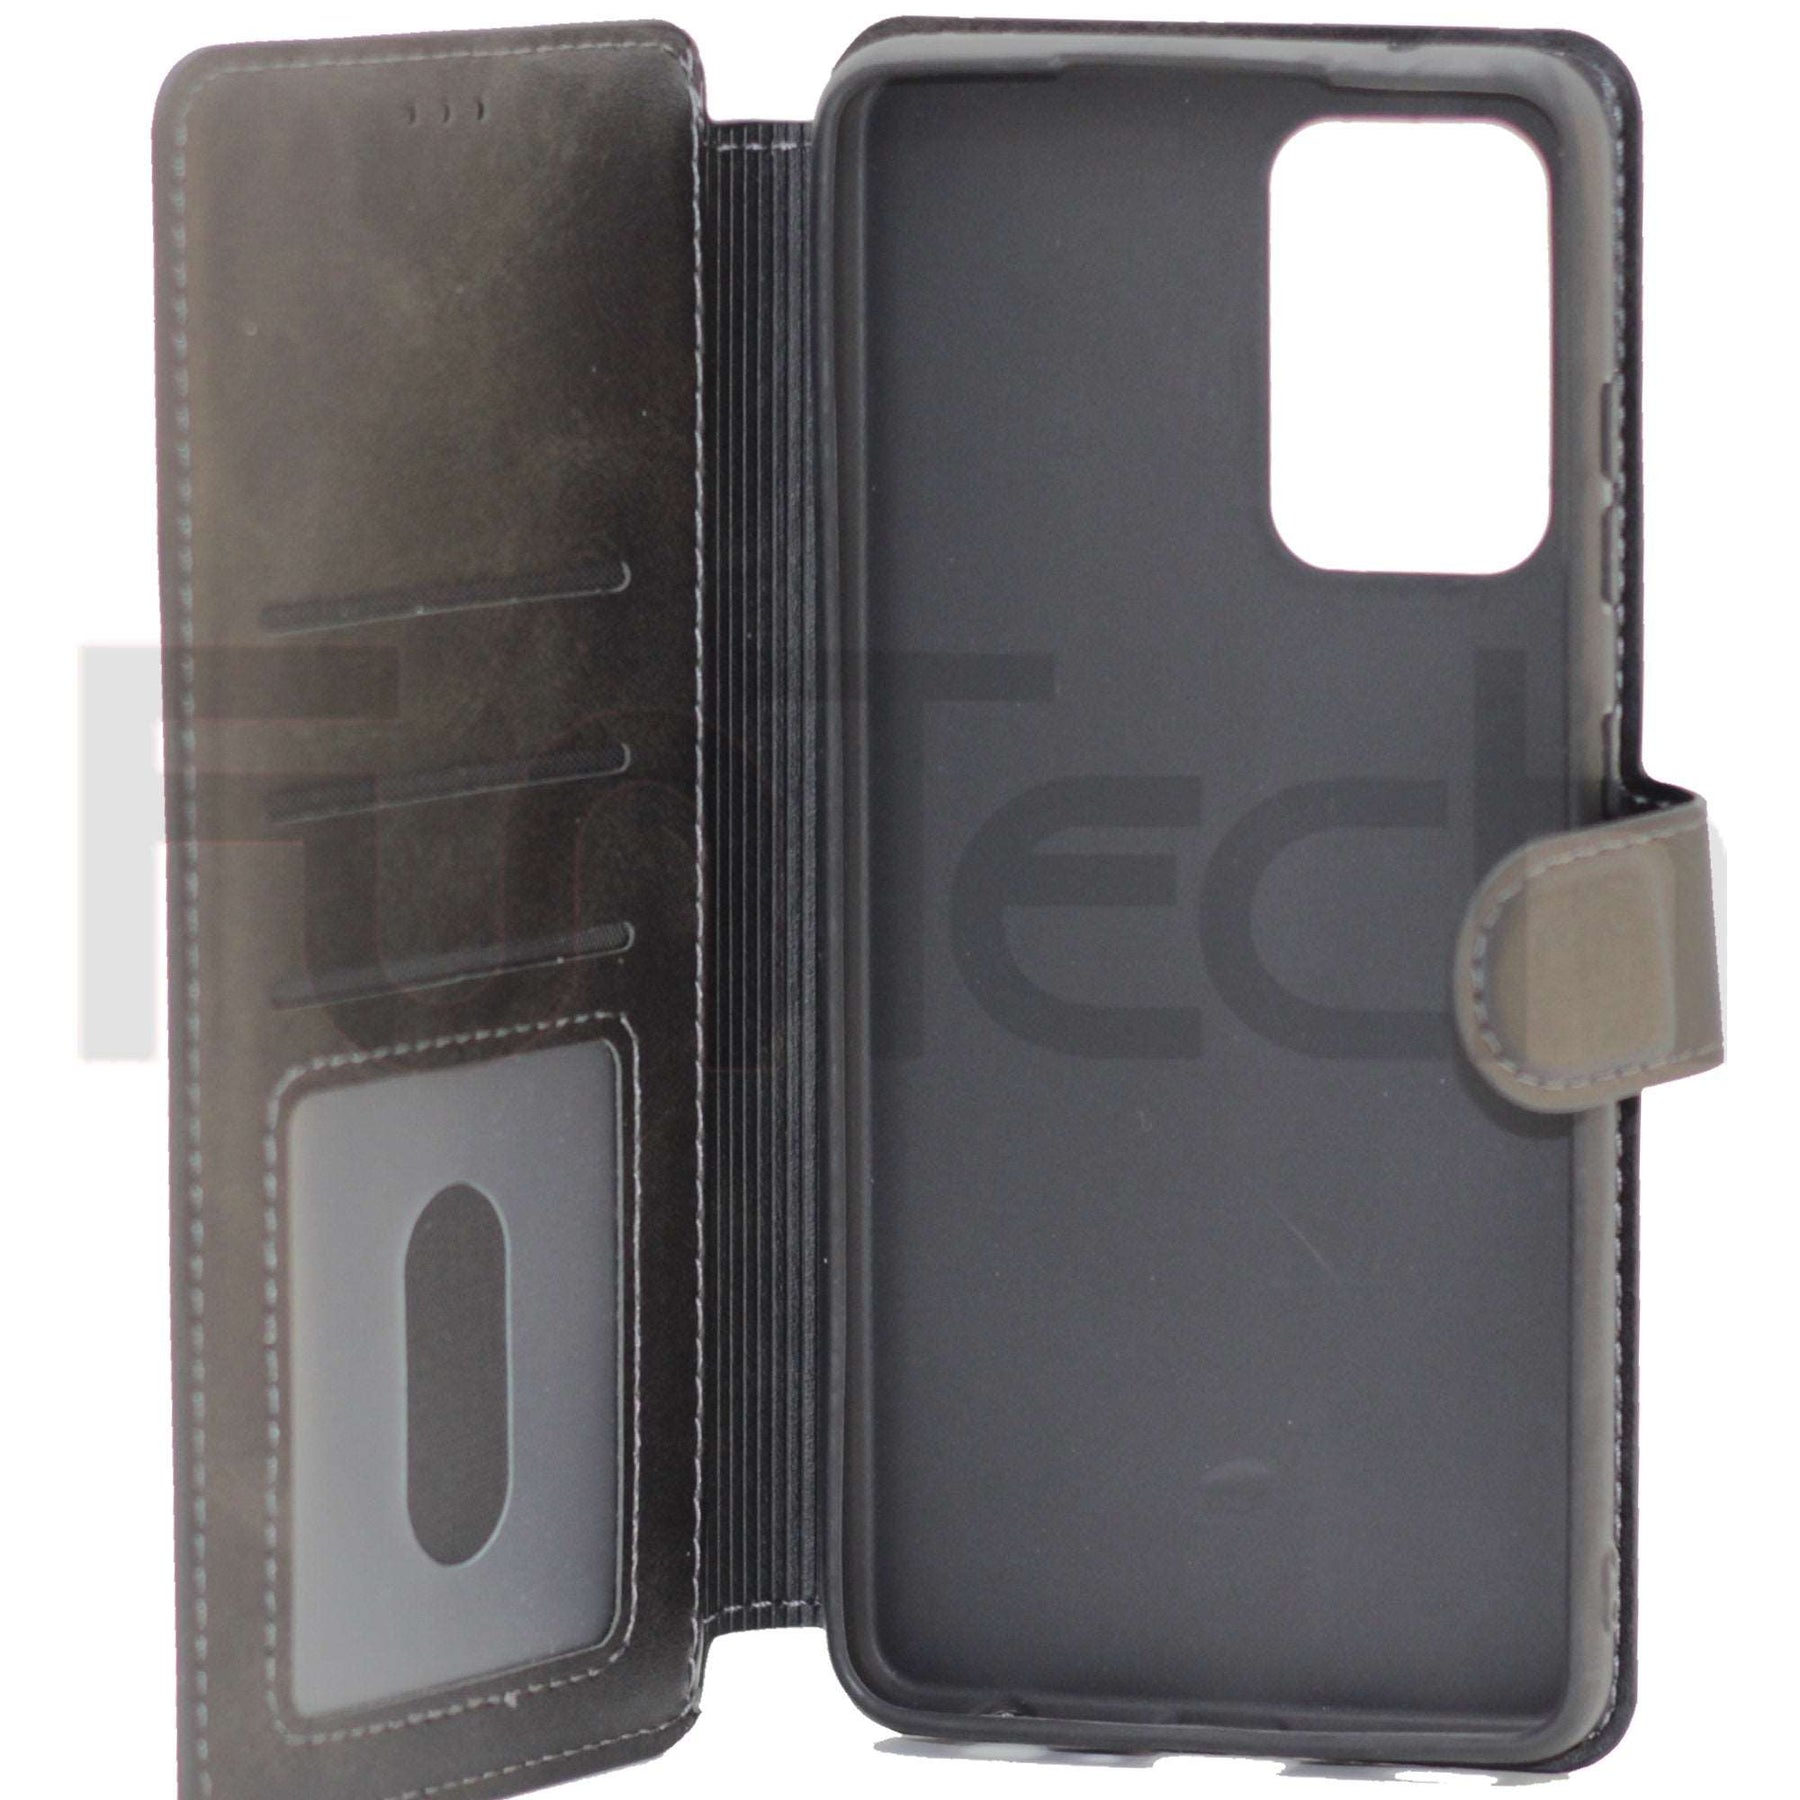 Samsung A52 Leather Wallet Case Color Black